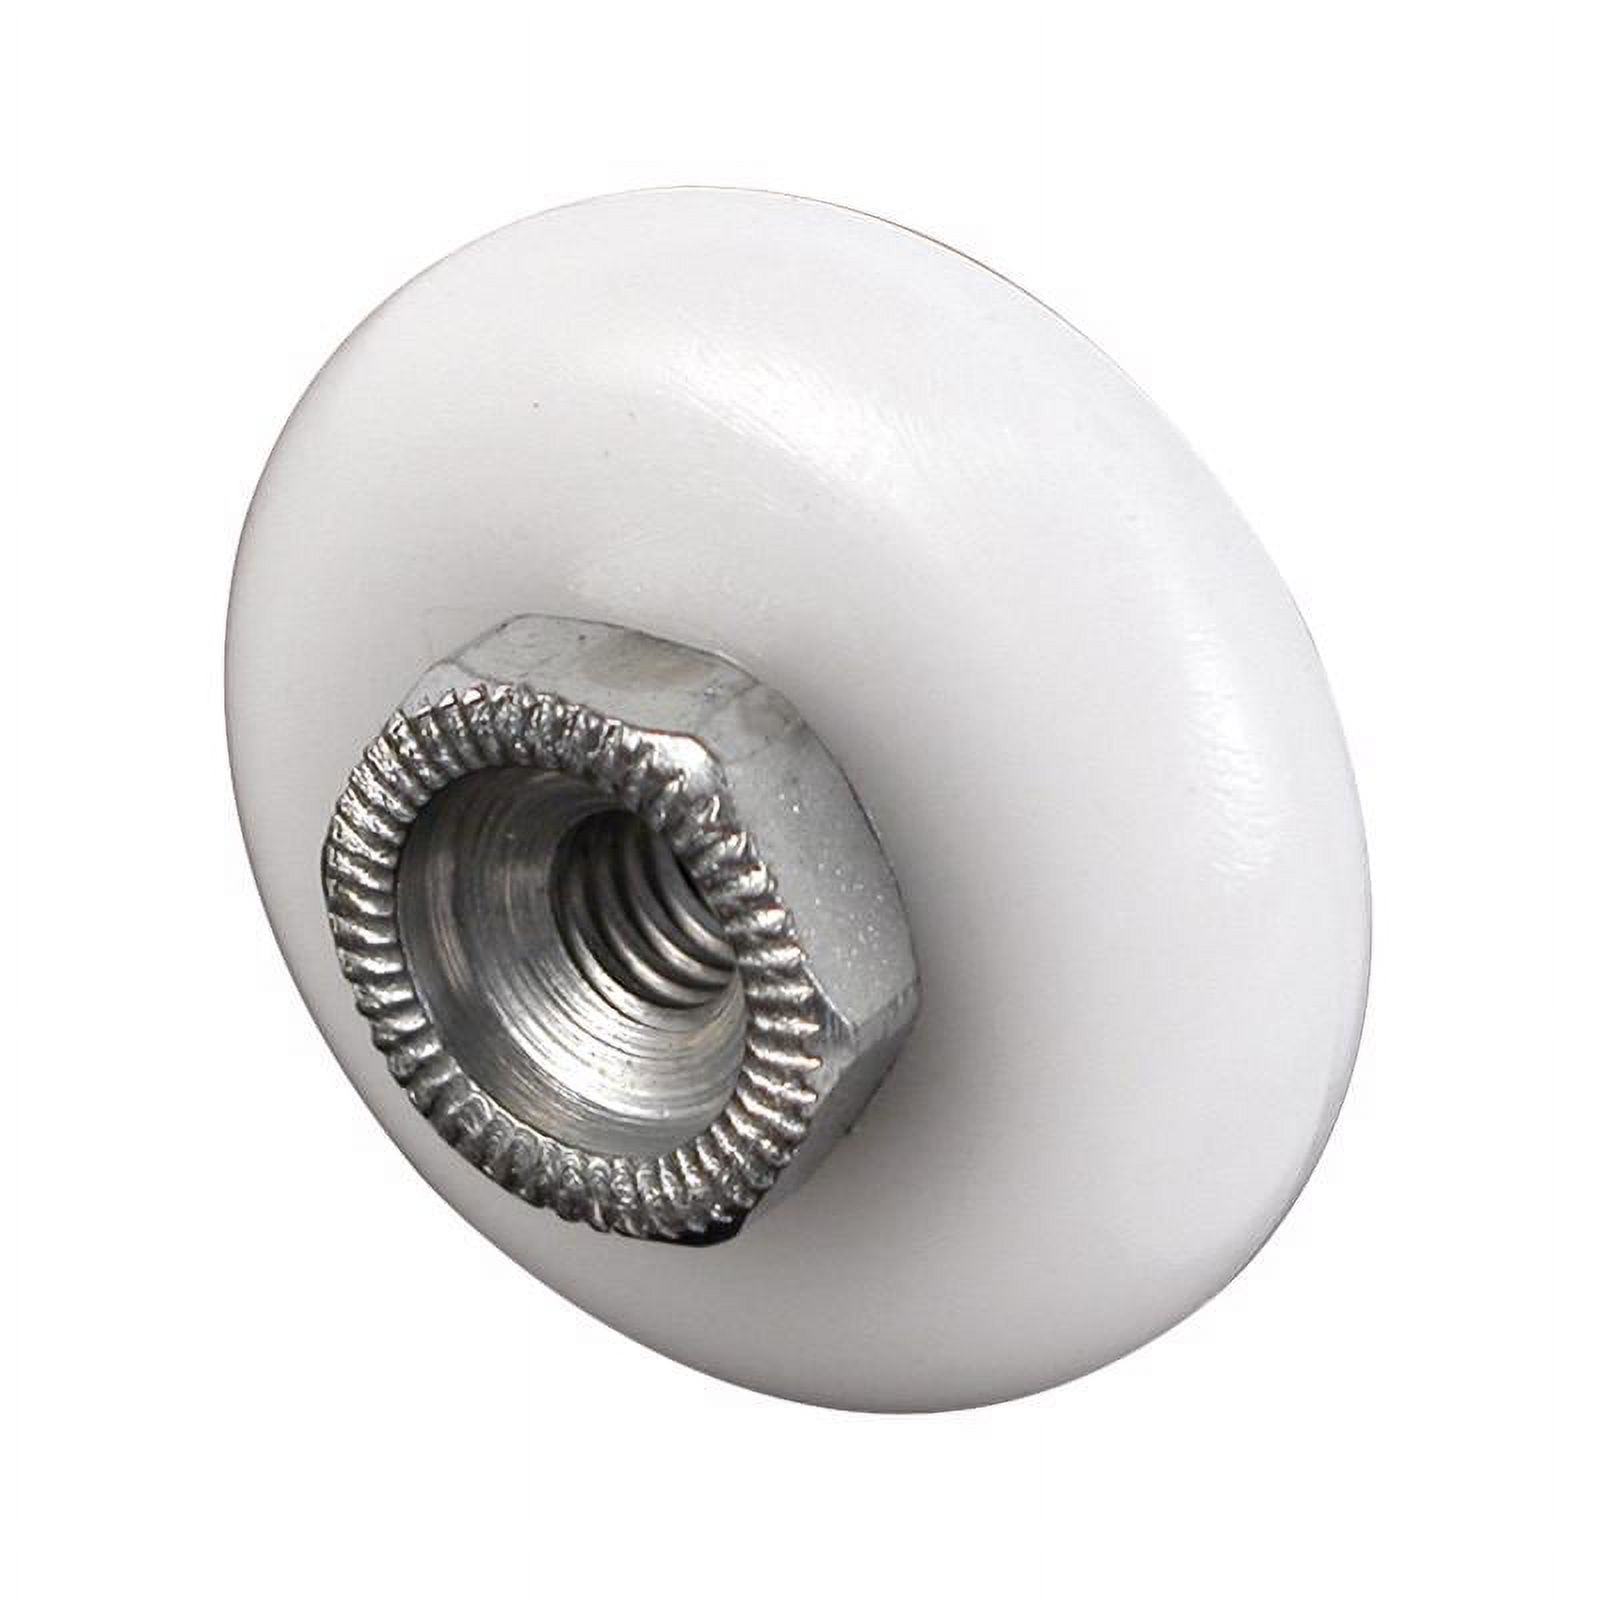 Prime-Line M 6151 Shower Door Roller, 3/4 in. Diam., Round Edge Nylon Tire, Steel Ball Bearings, Threaded Hex Head Hub, Pack of 4 - image 1 of 2